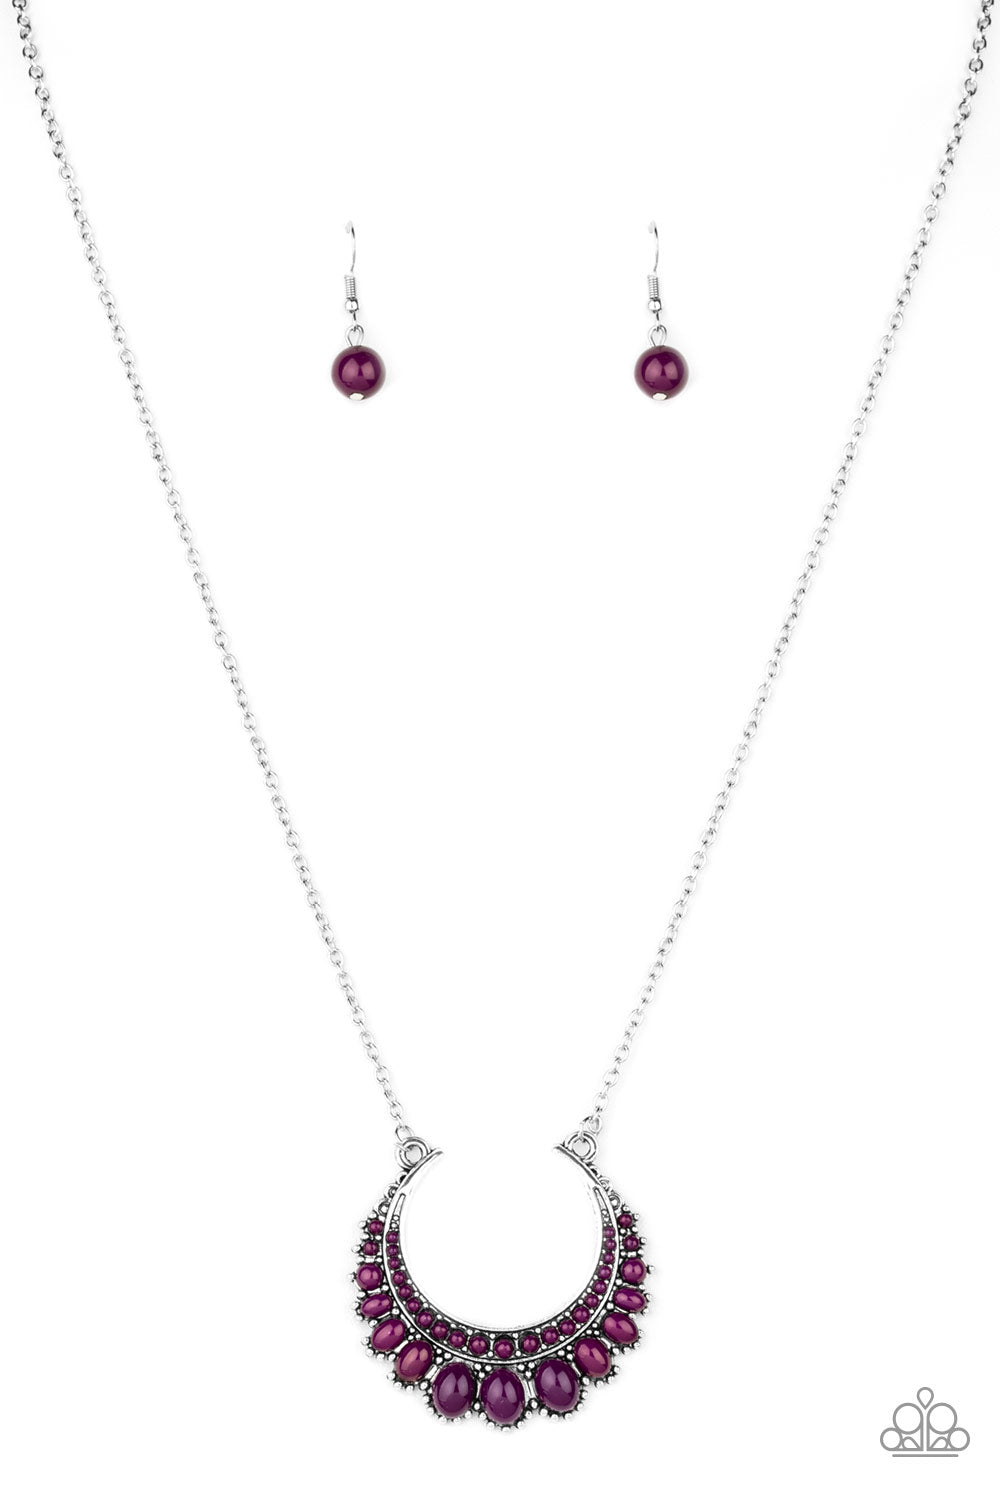 Count To ZEN - Purple Necklace freeshipping - JewLz4u Gemstone Gallery